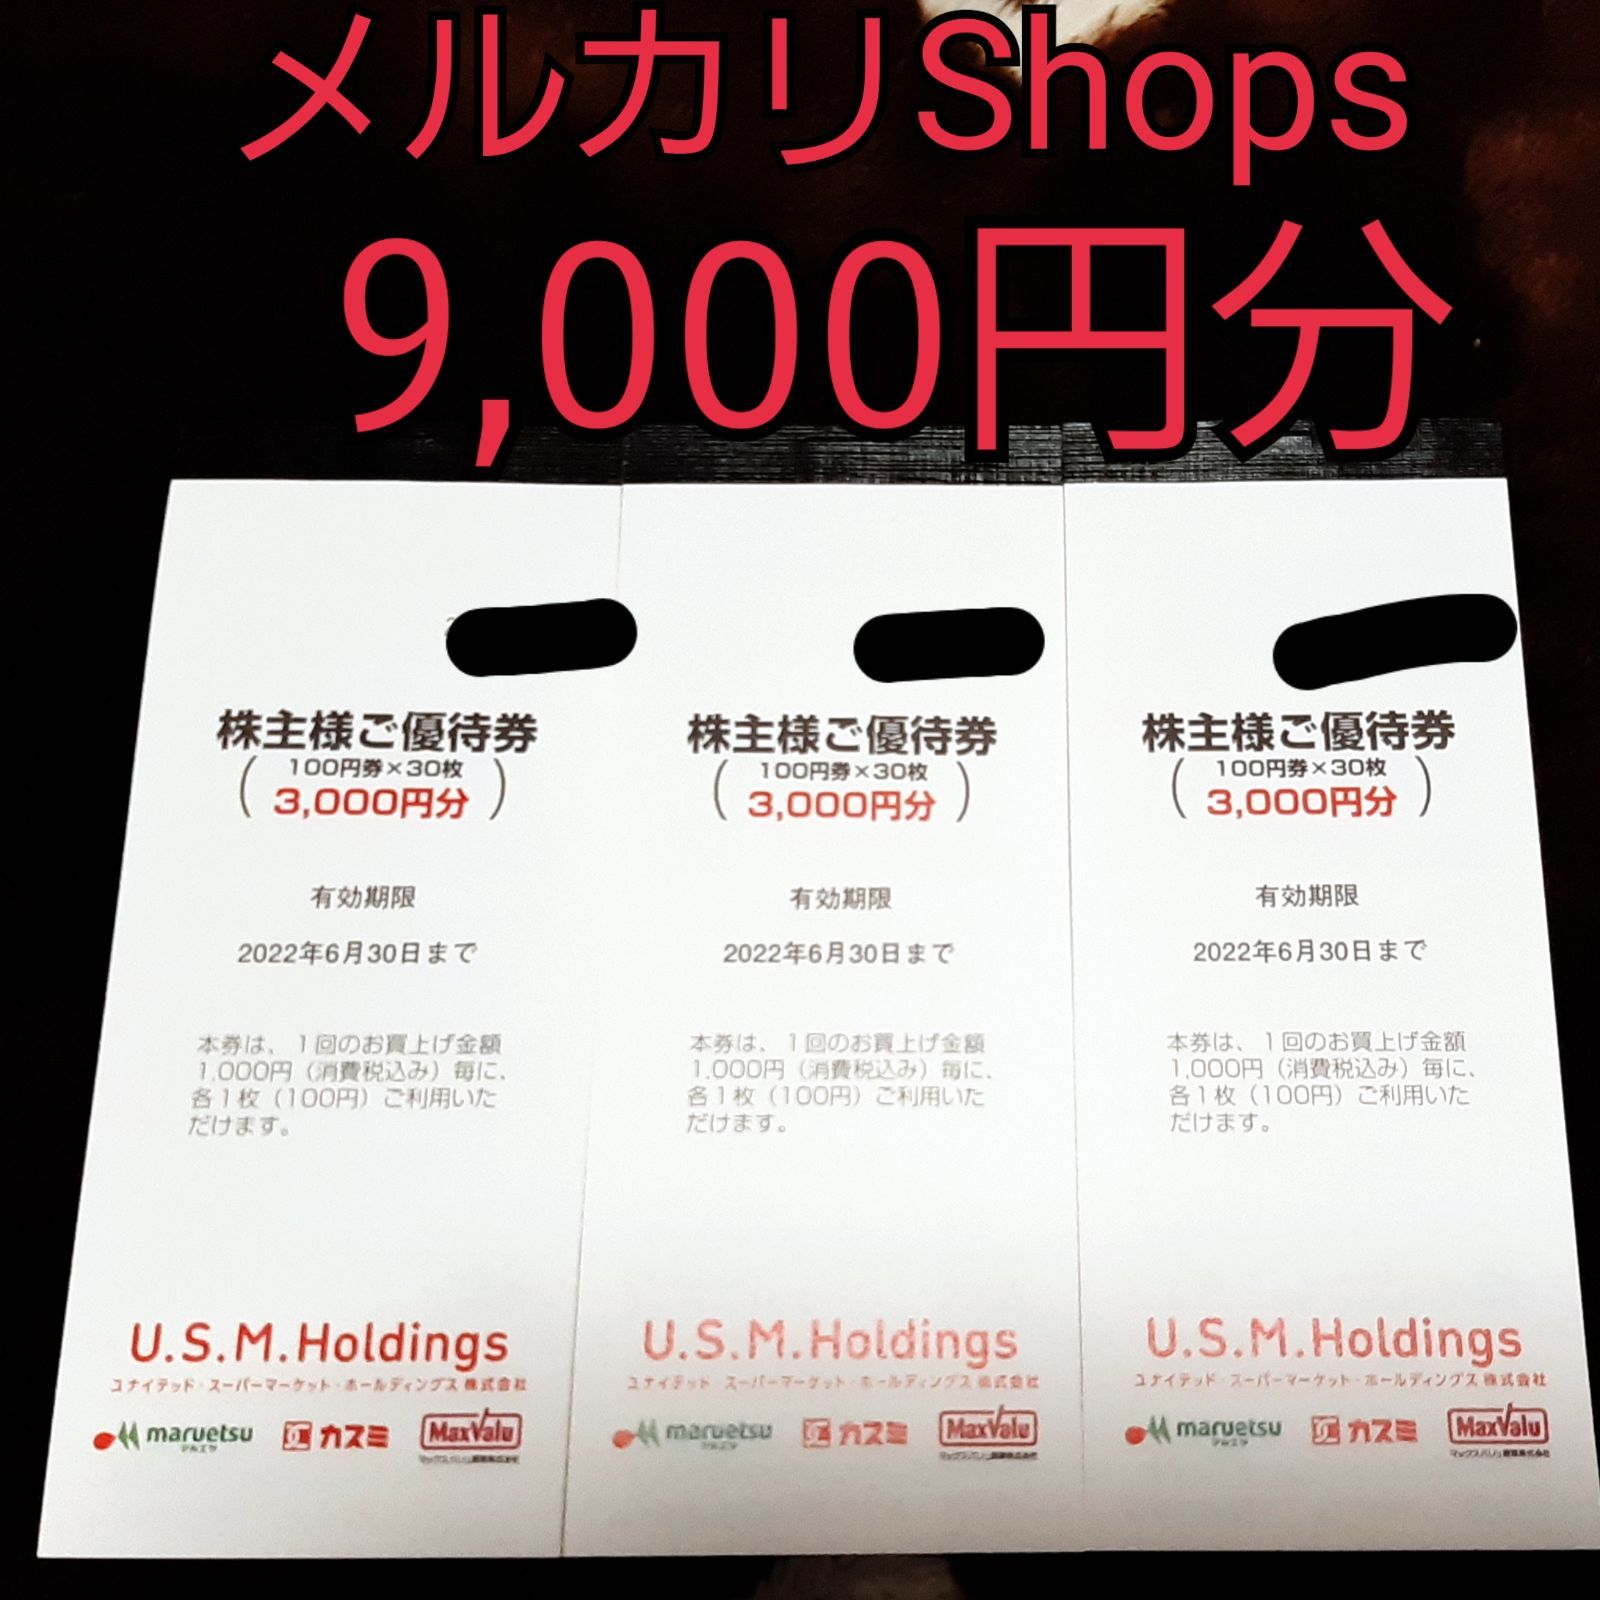 USMH 株主優待 9,000円分 - メルカリ